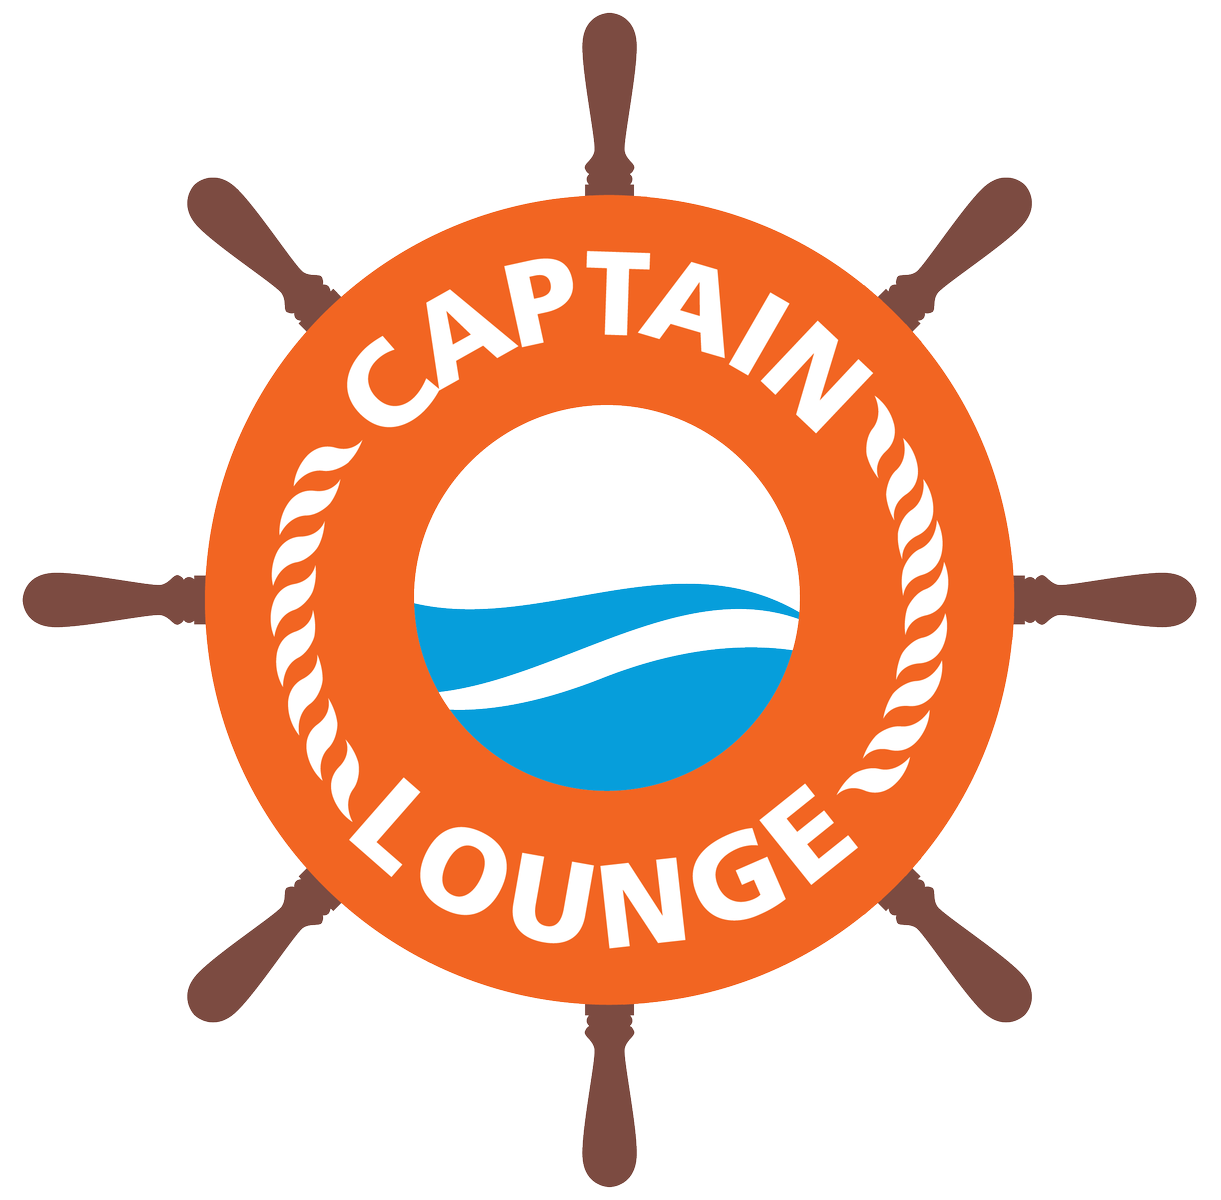 Captain Lounge logo - Lexis Hibiscus PD